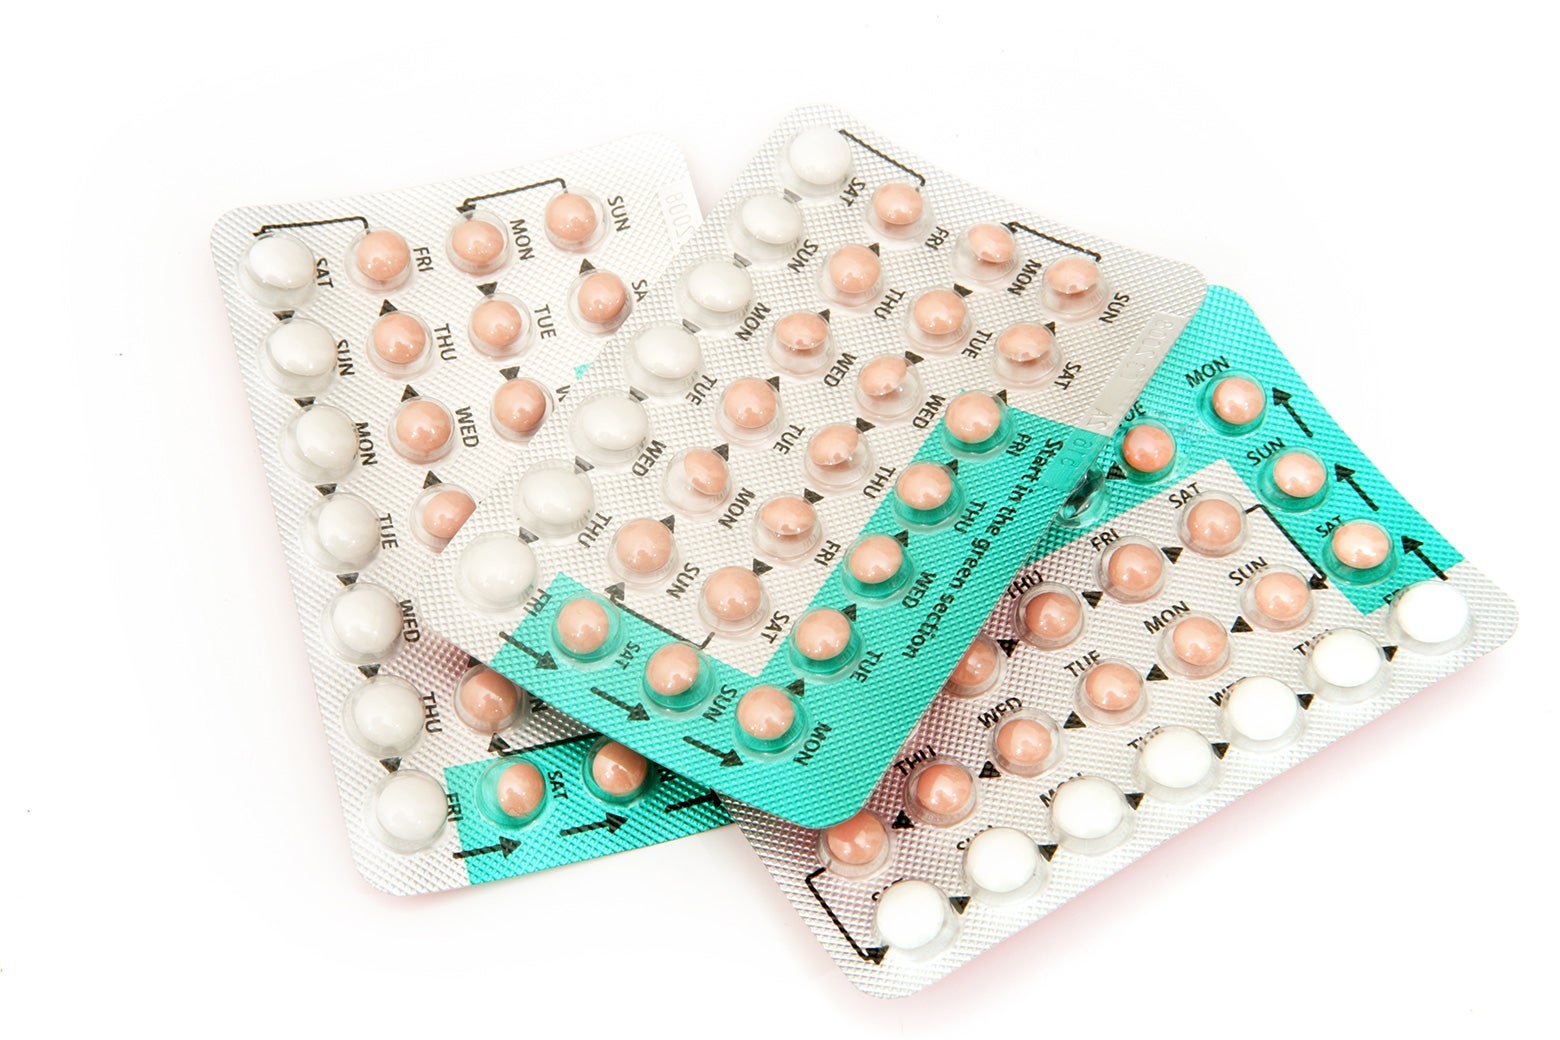 Three packs of birth control pills